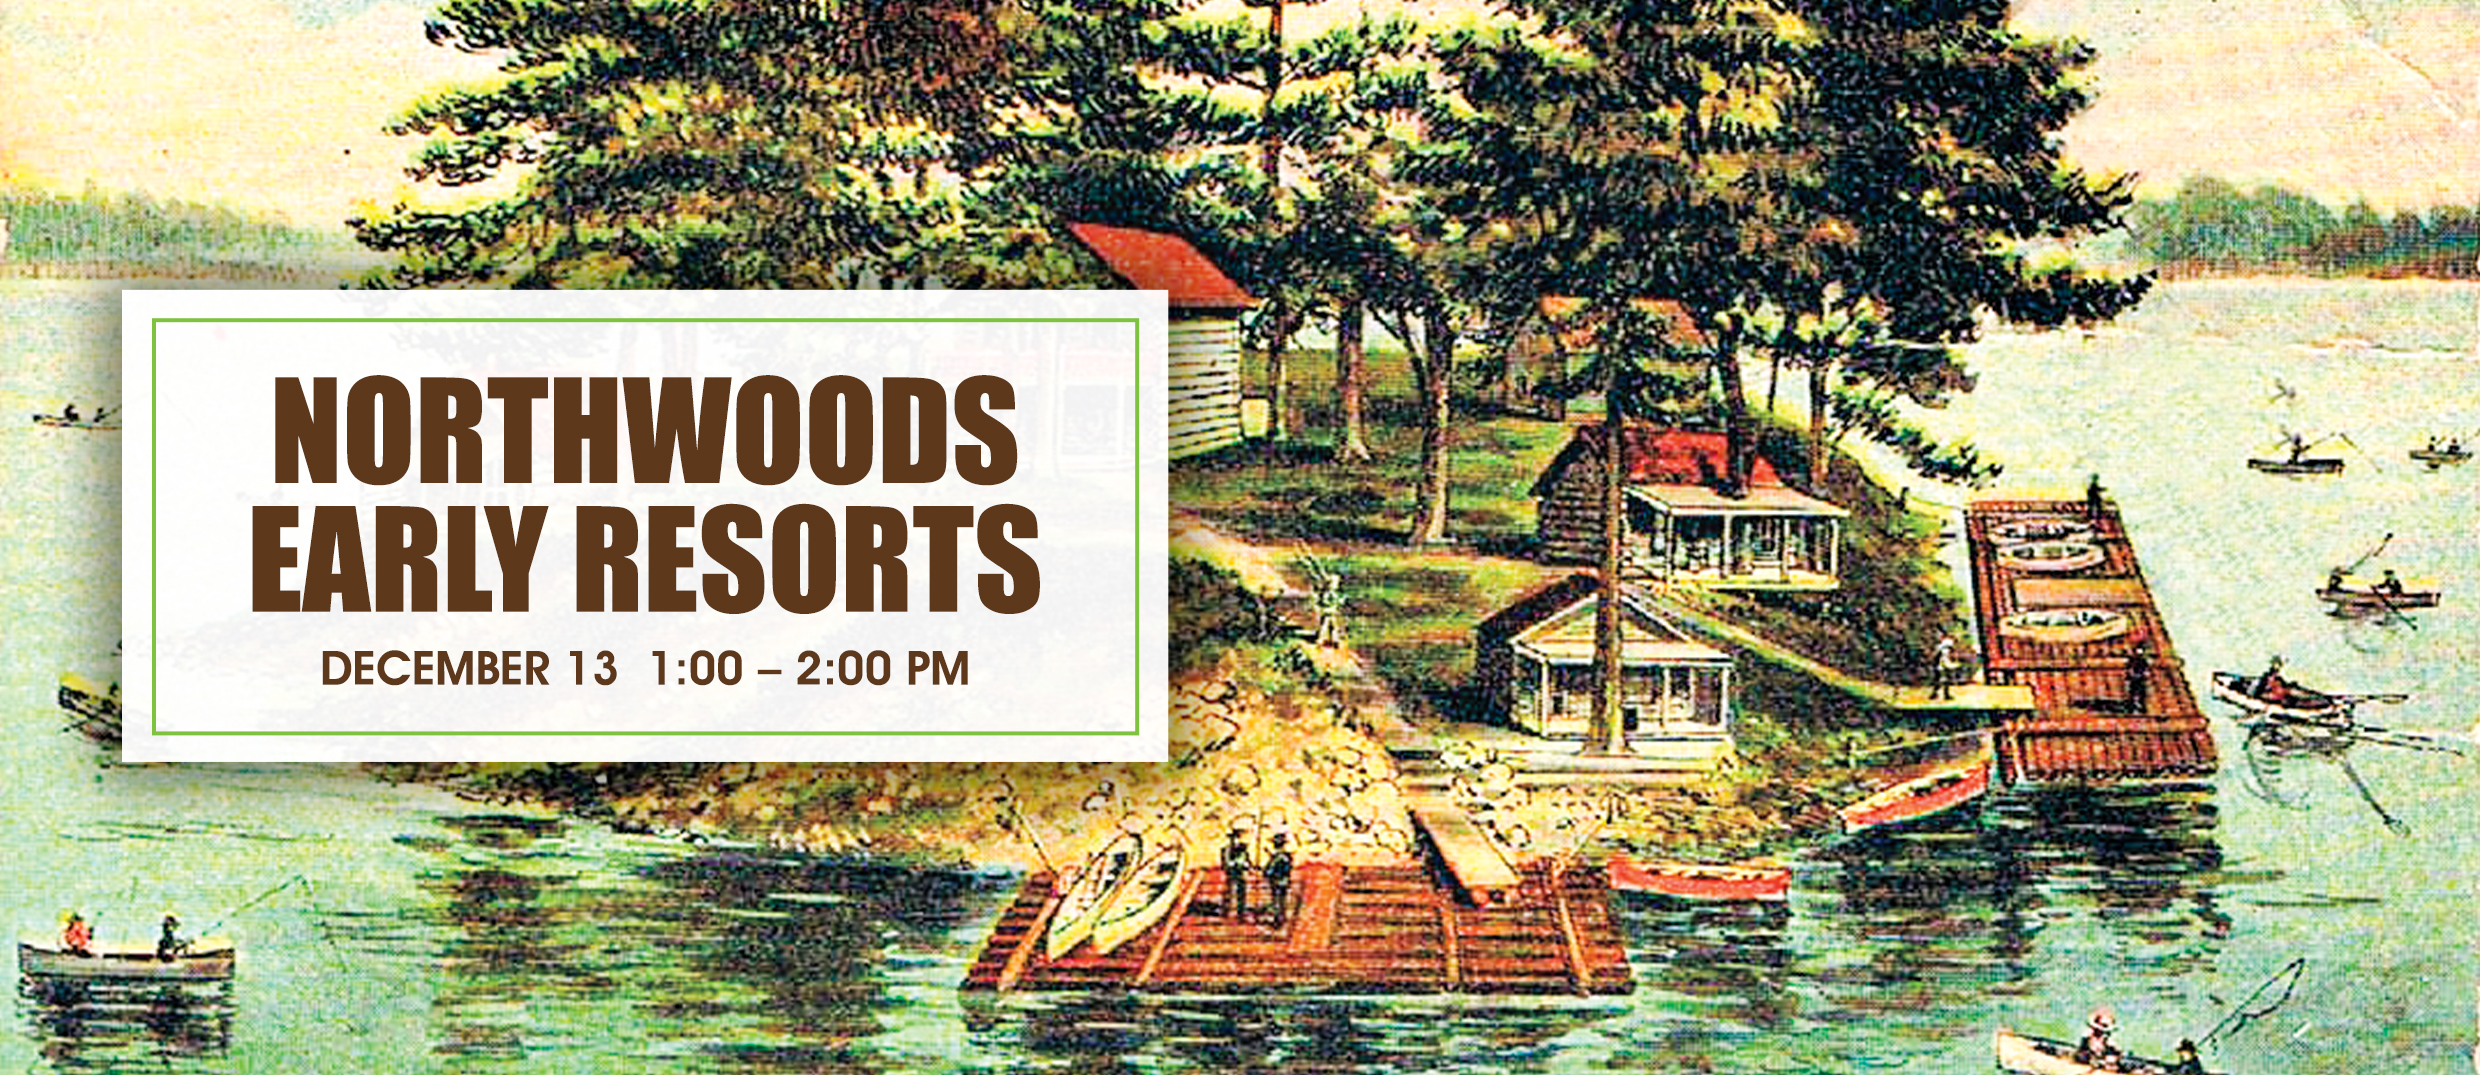 Northwoods Early Resorts